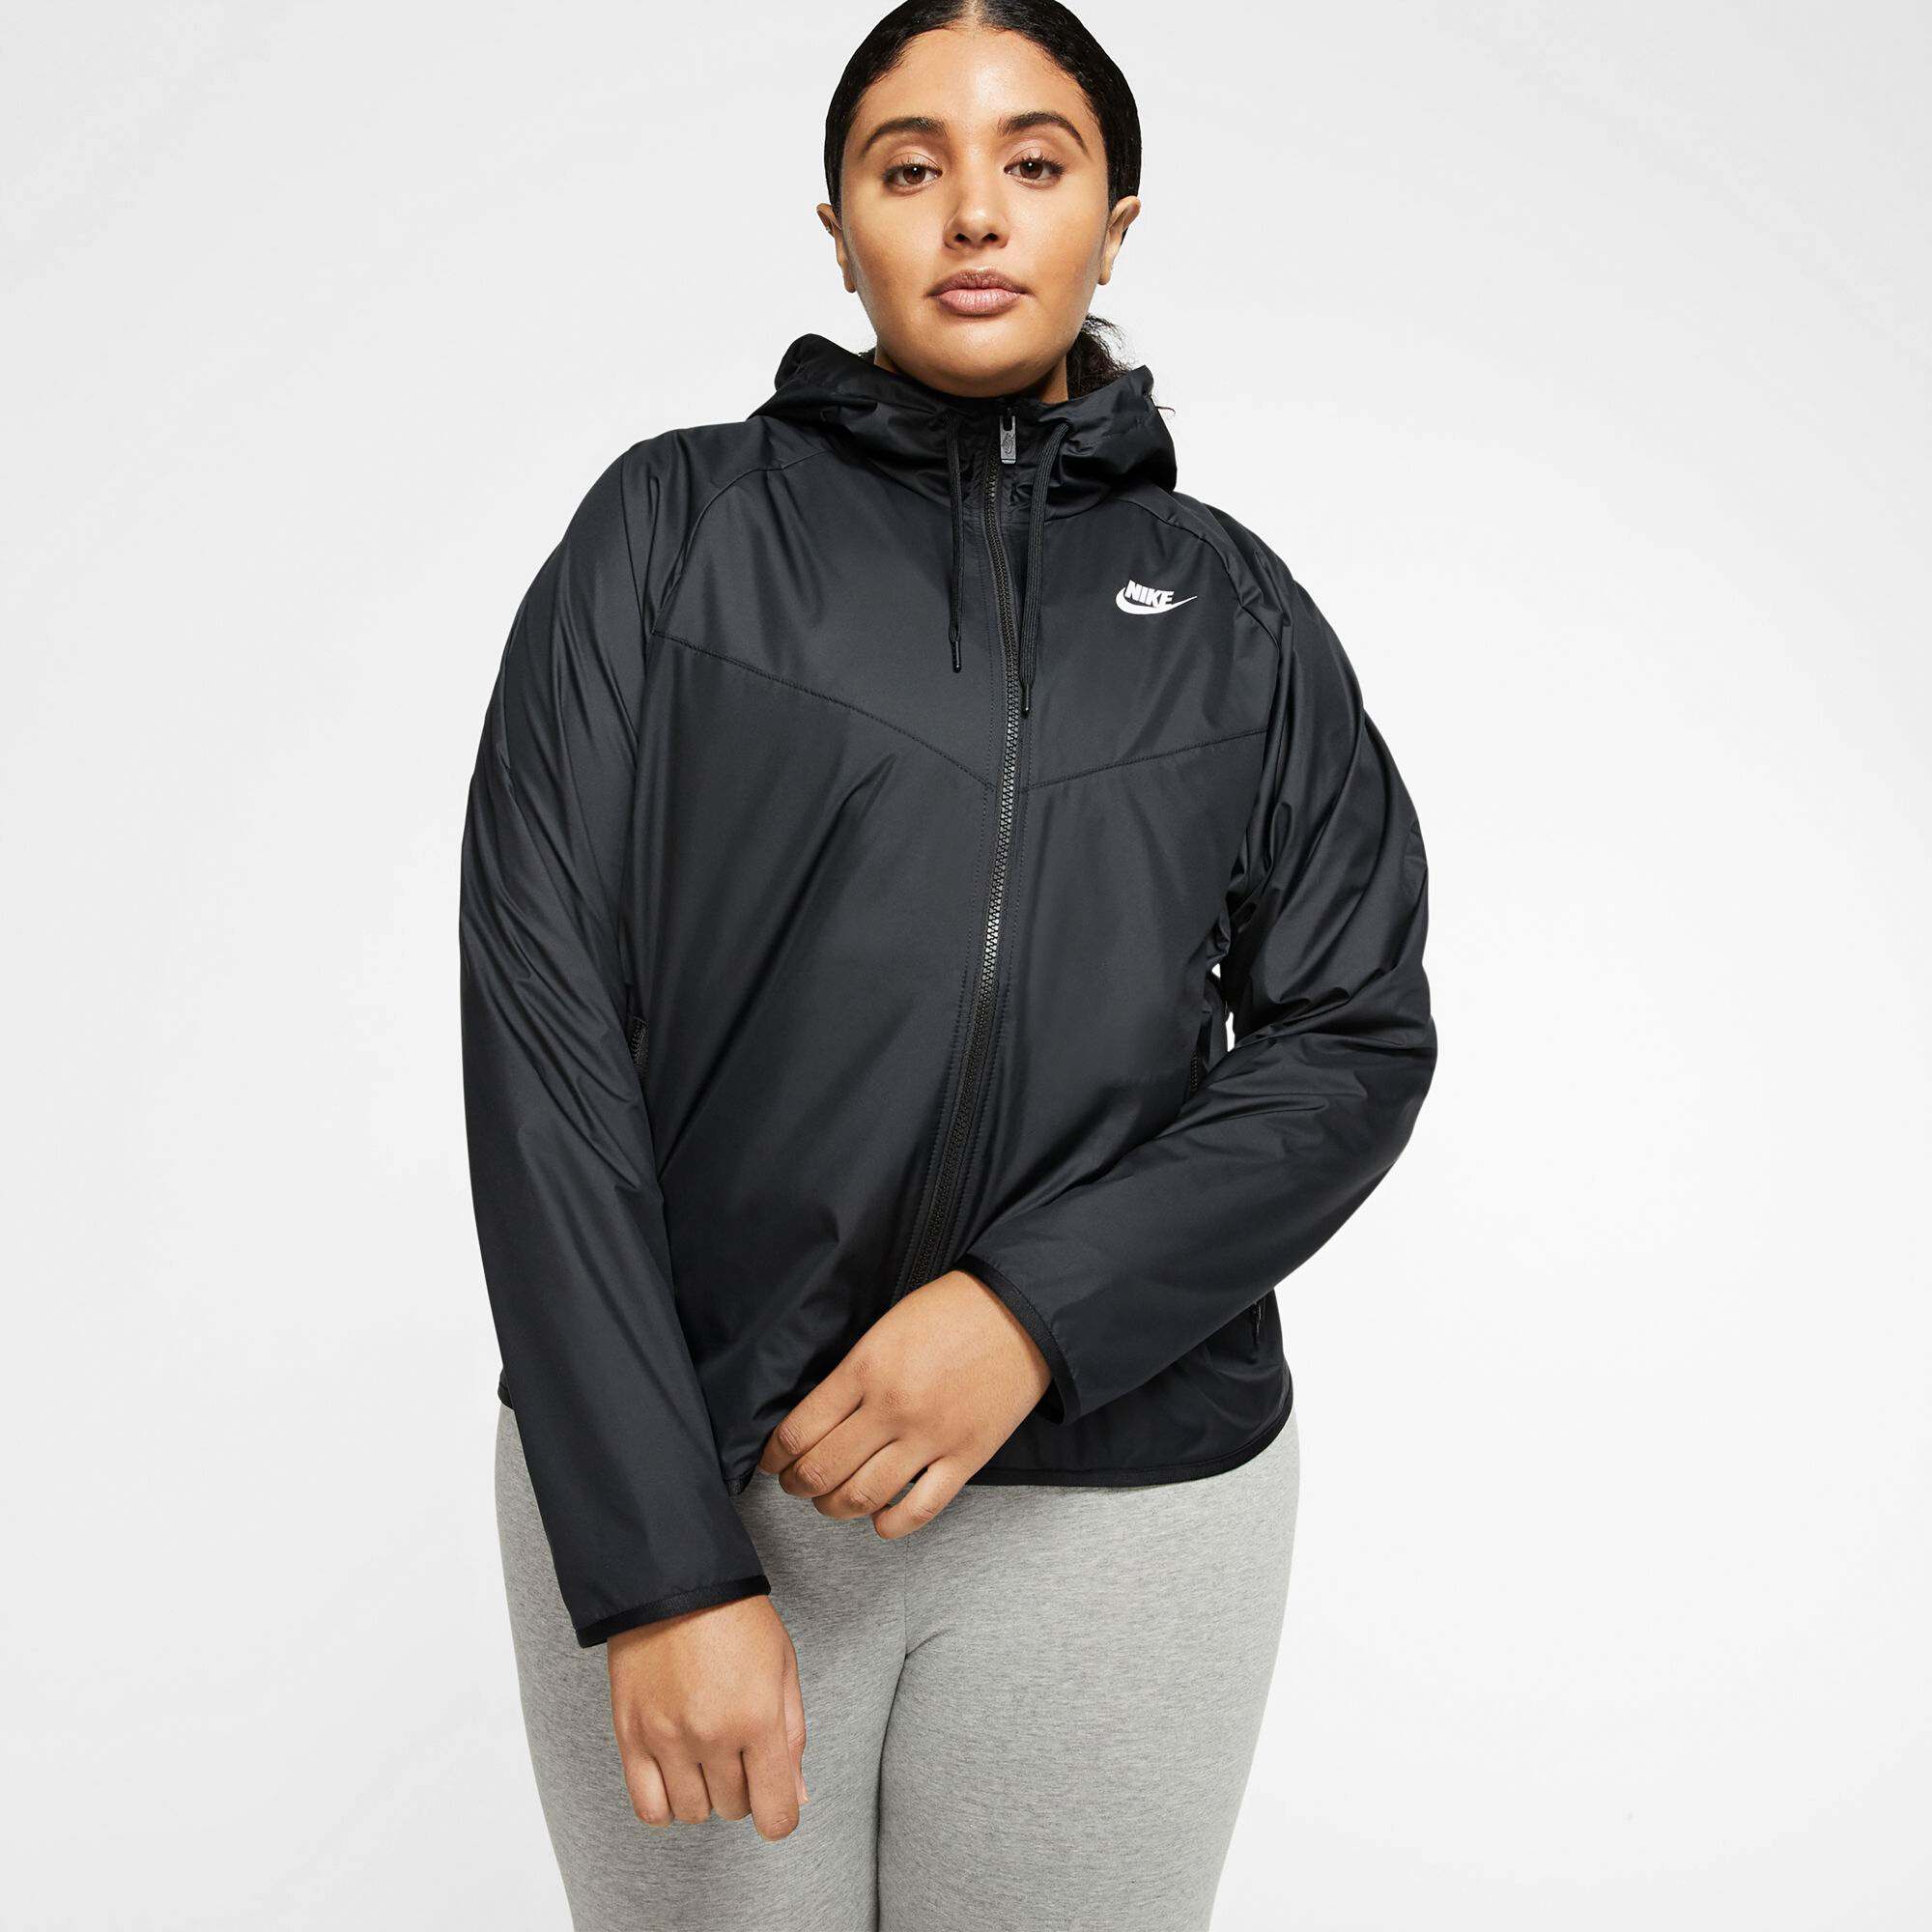 Buy Nike Sportswear Plus Size Training Jacket Women Black, White